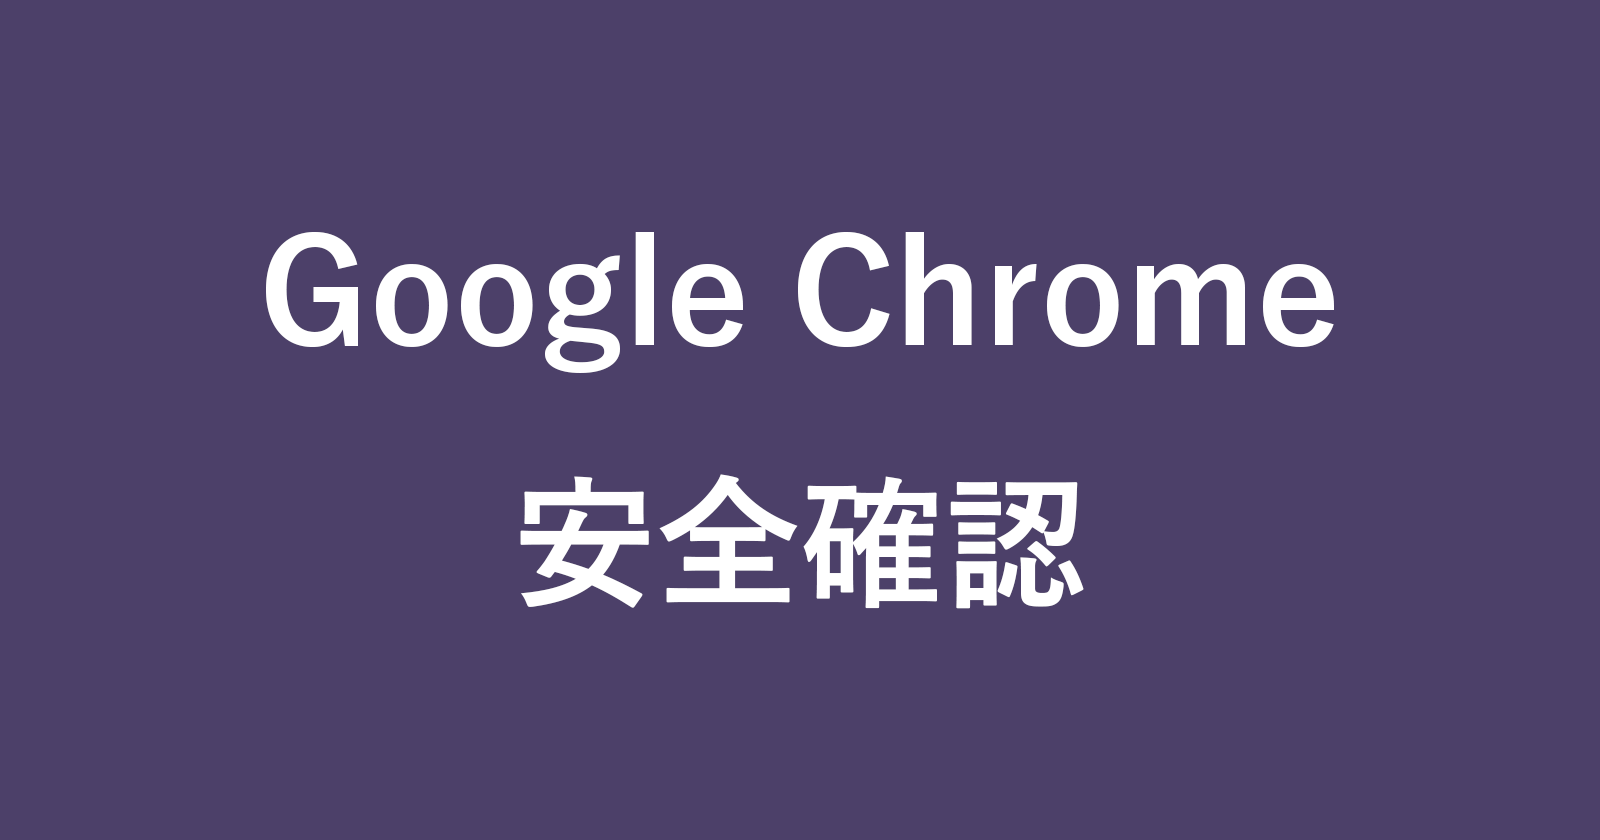 google chrome safety check